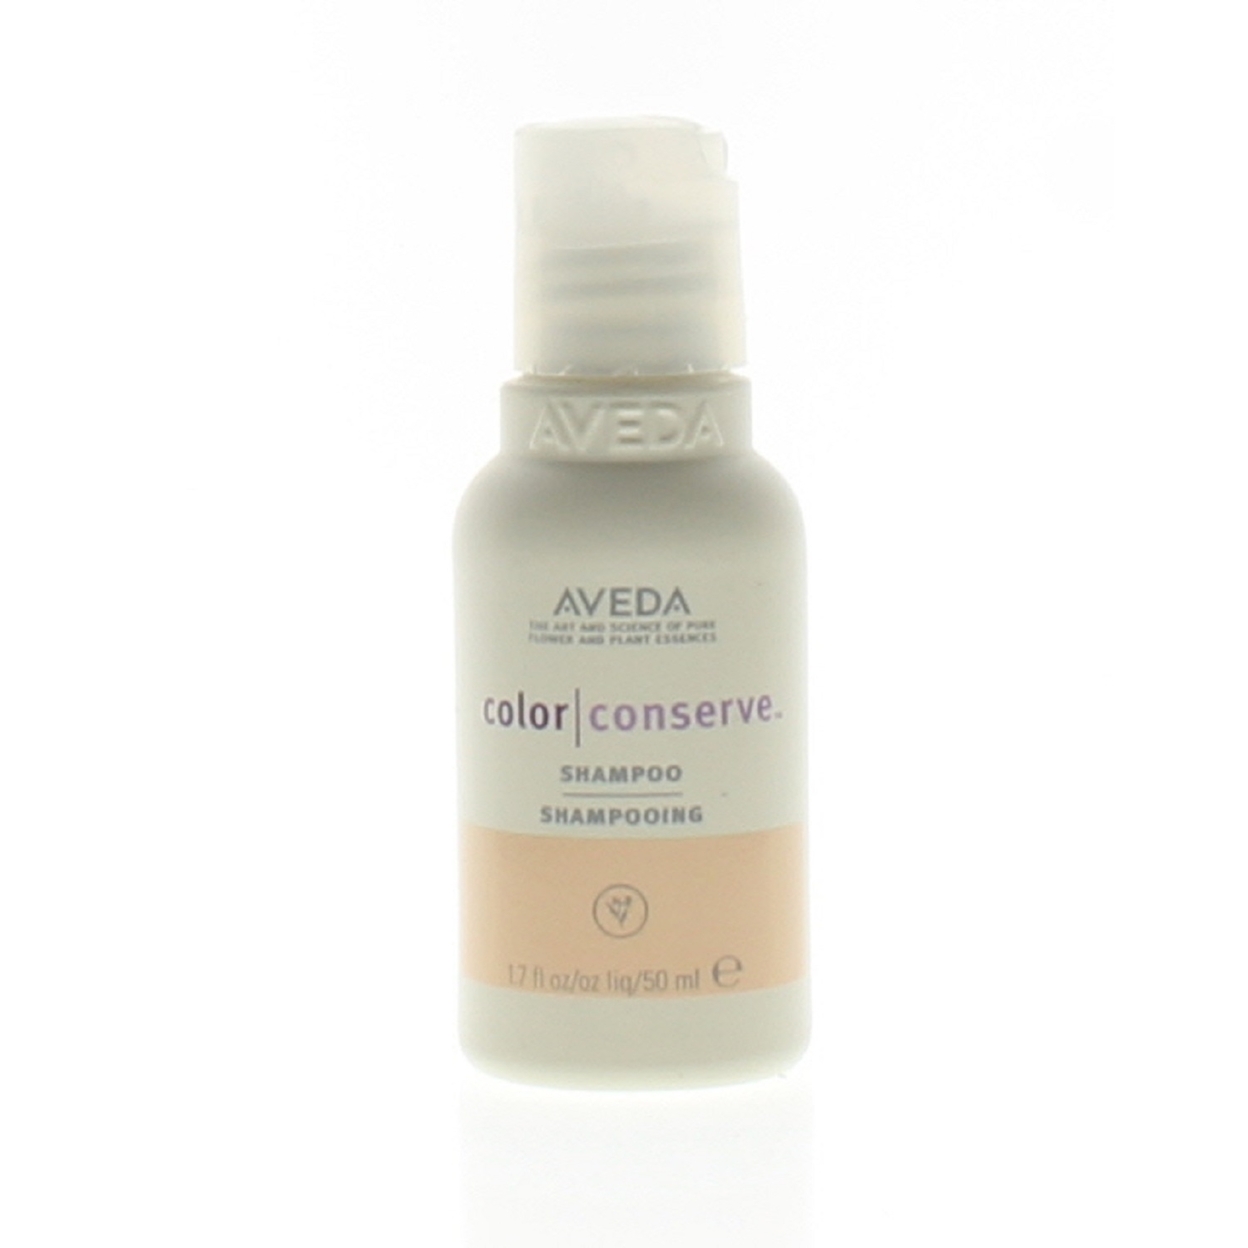 Aveda Color Conserve Shampoo 1.7oz/50ml